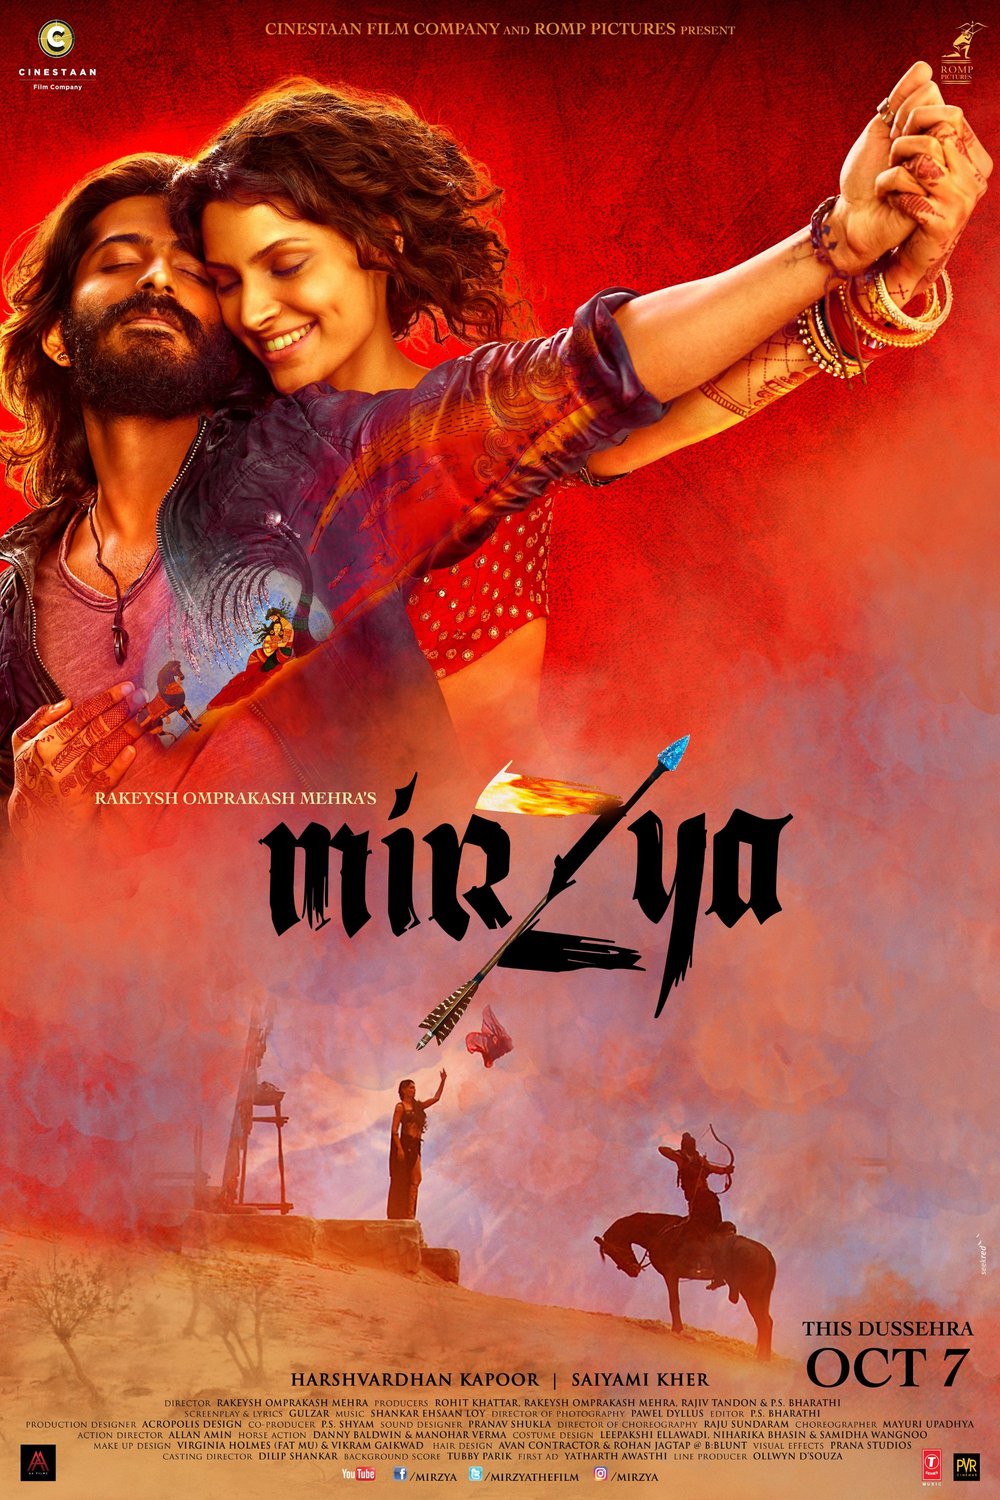 L'affiche du film Mirzya